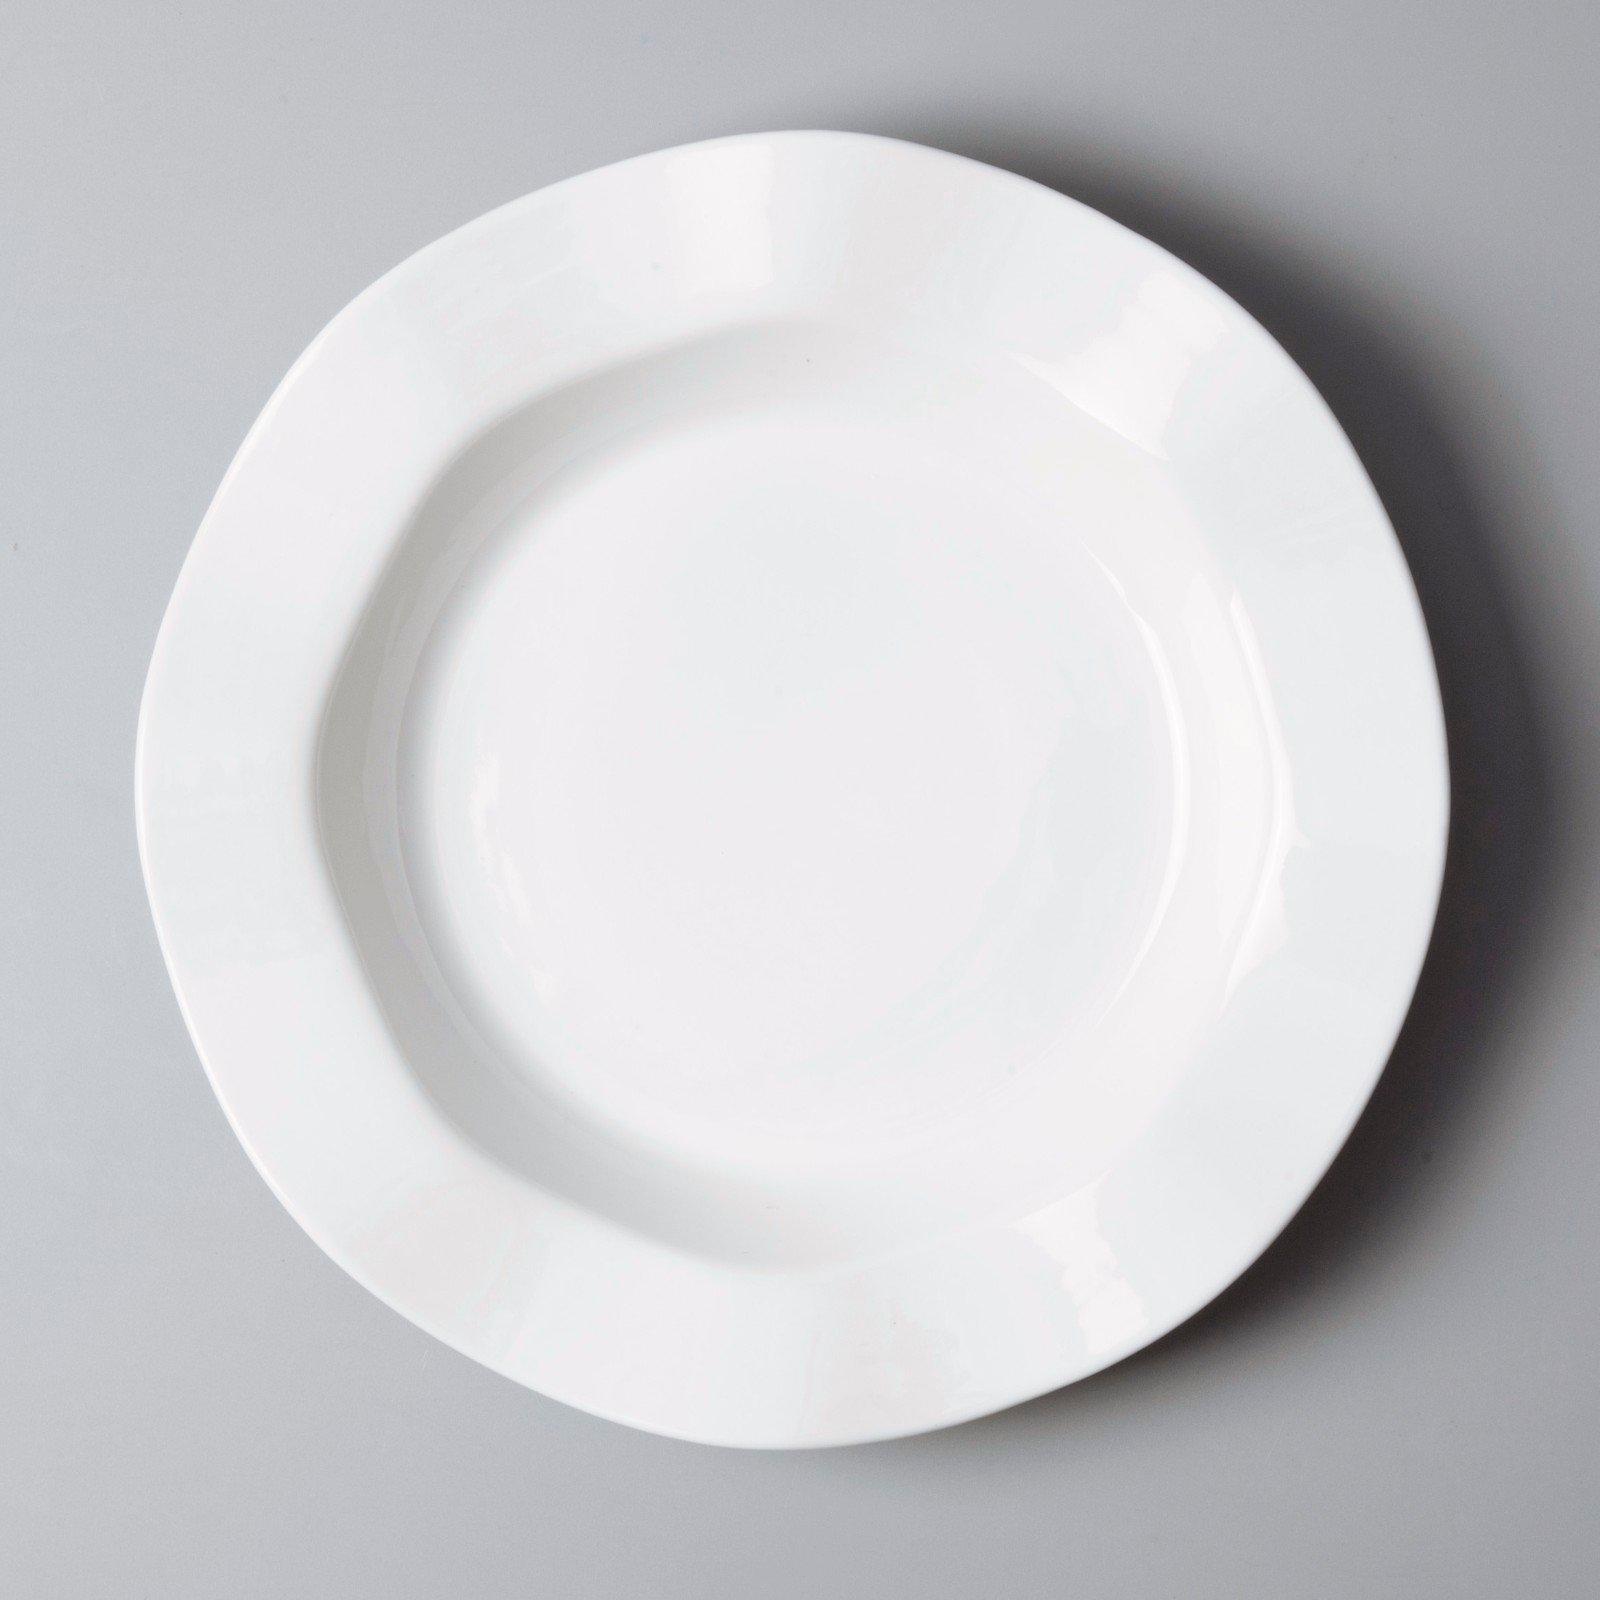 square restaurant dinner plates cheap series for home-3